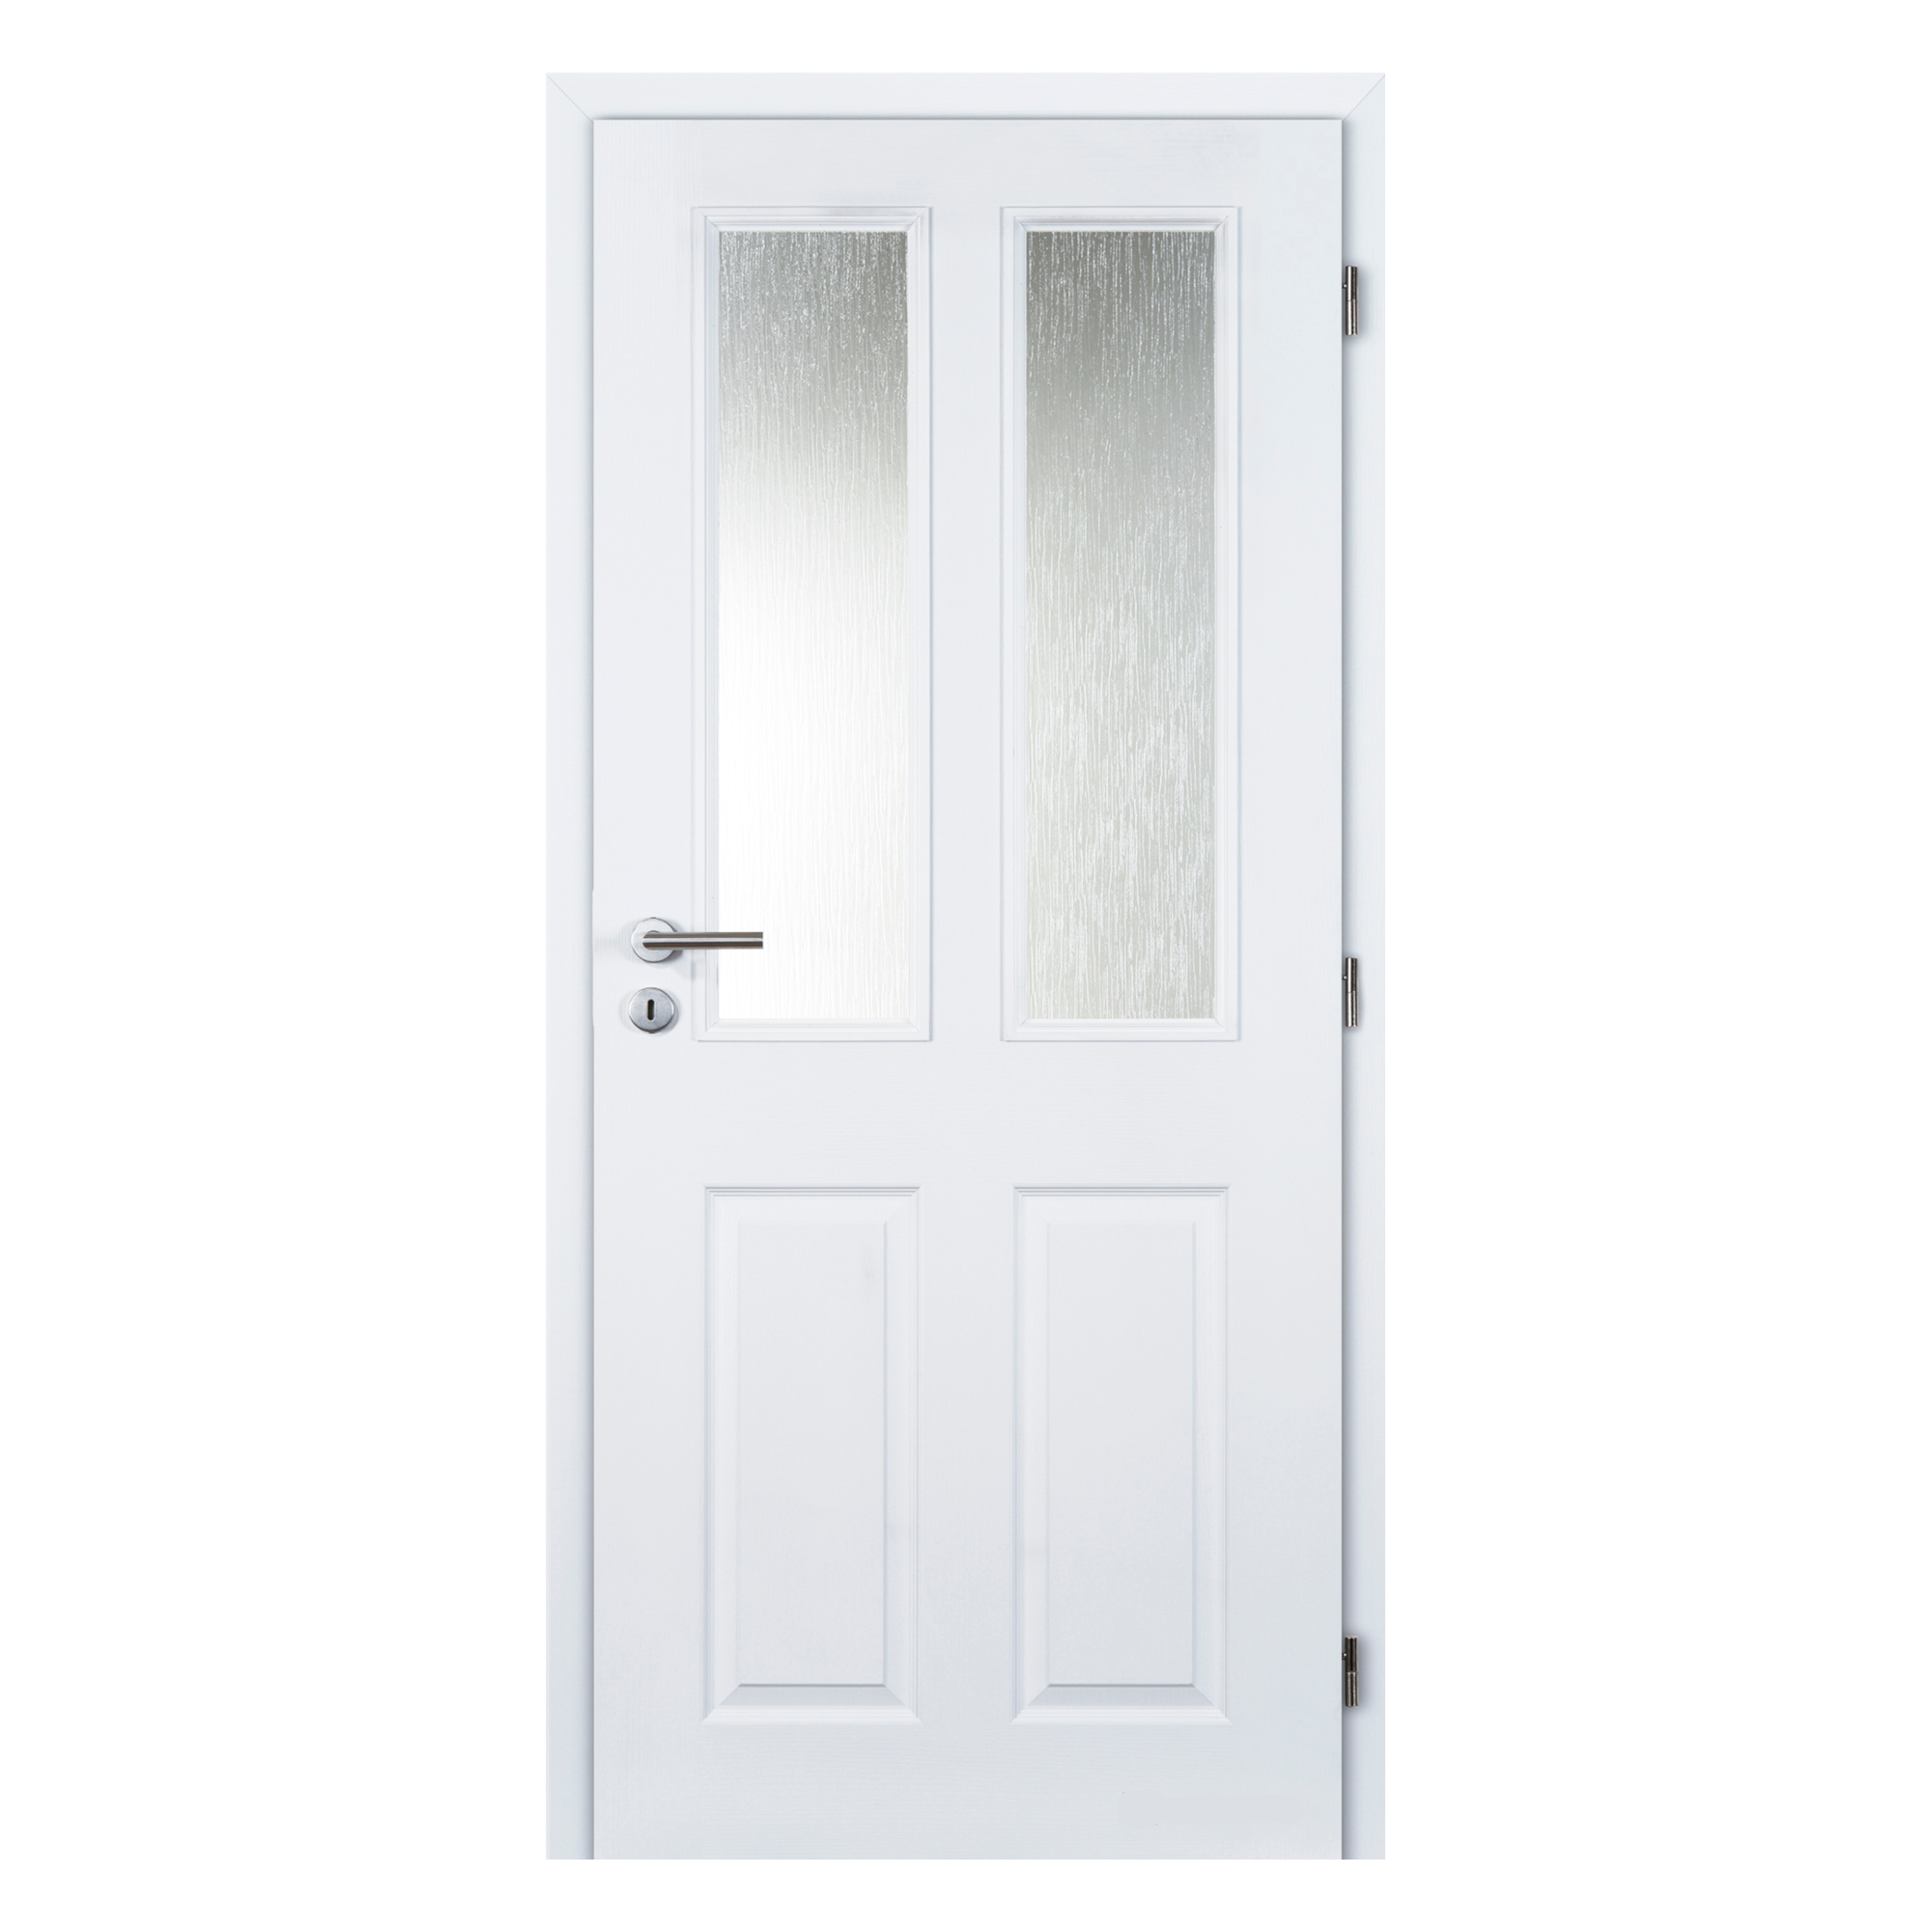 Dveře prosklené profilované Doornite ACHILLES pravé 600 mm bílé Masonite